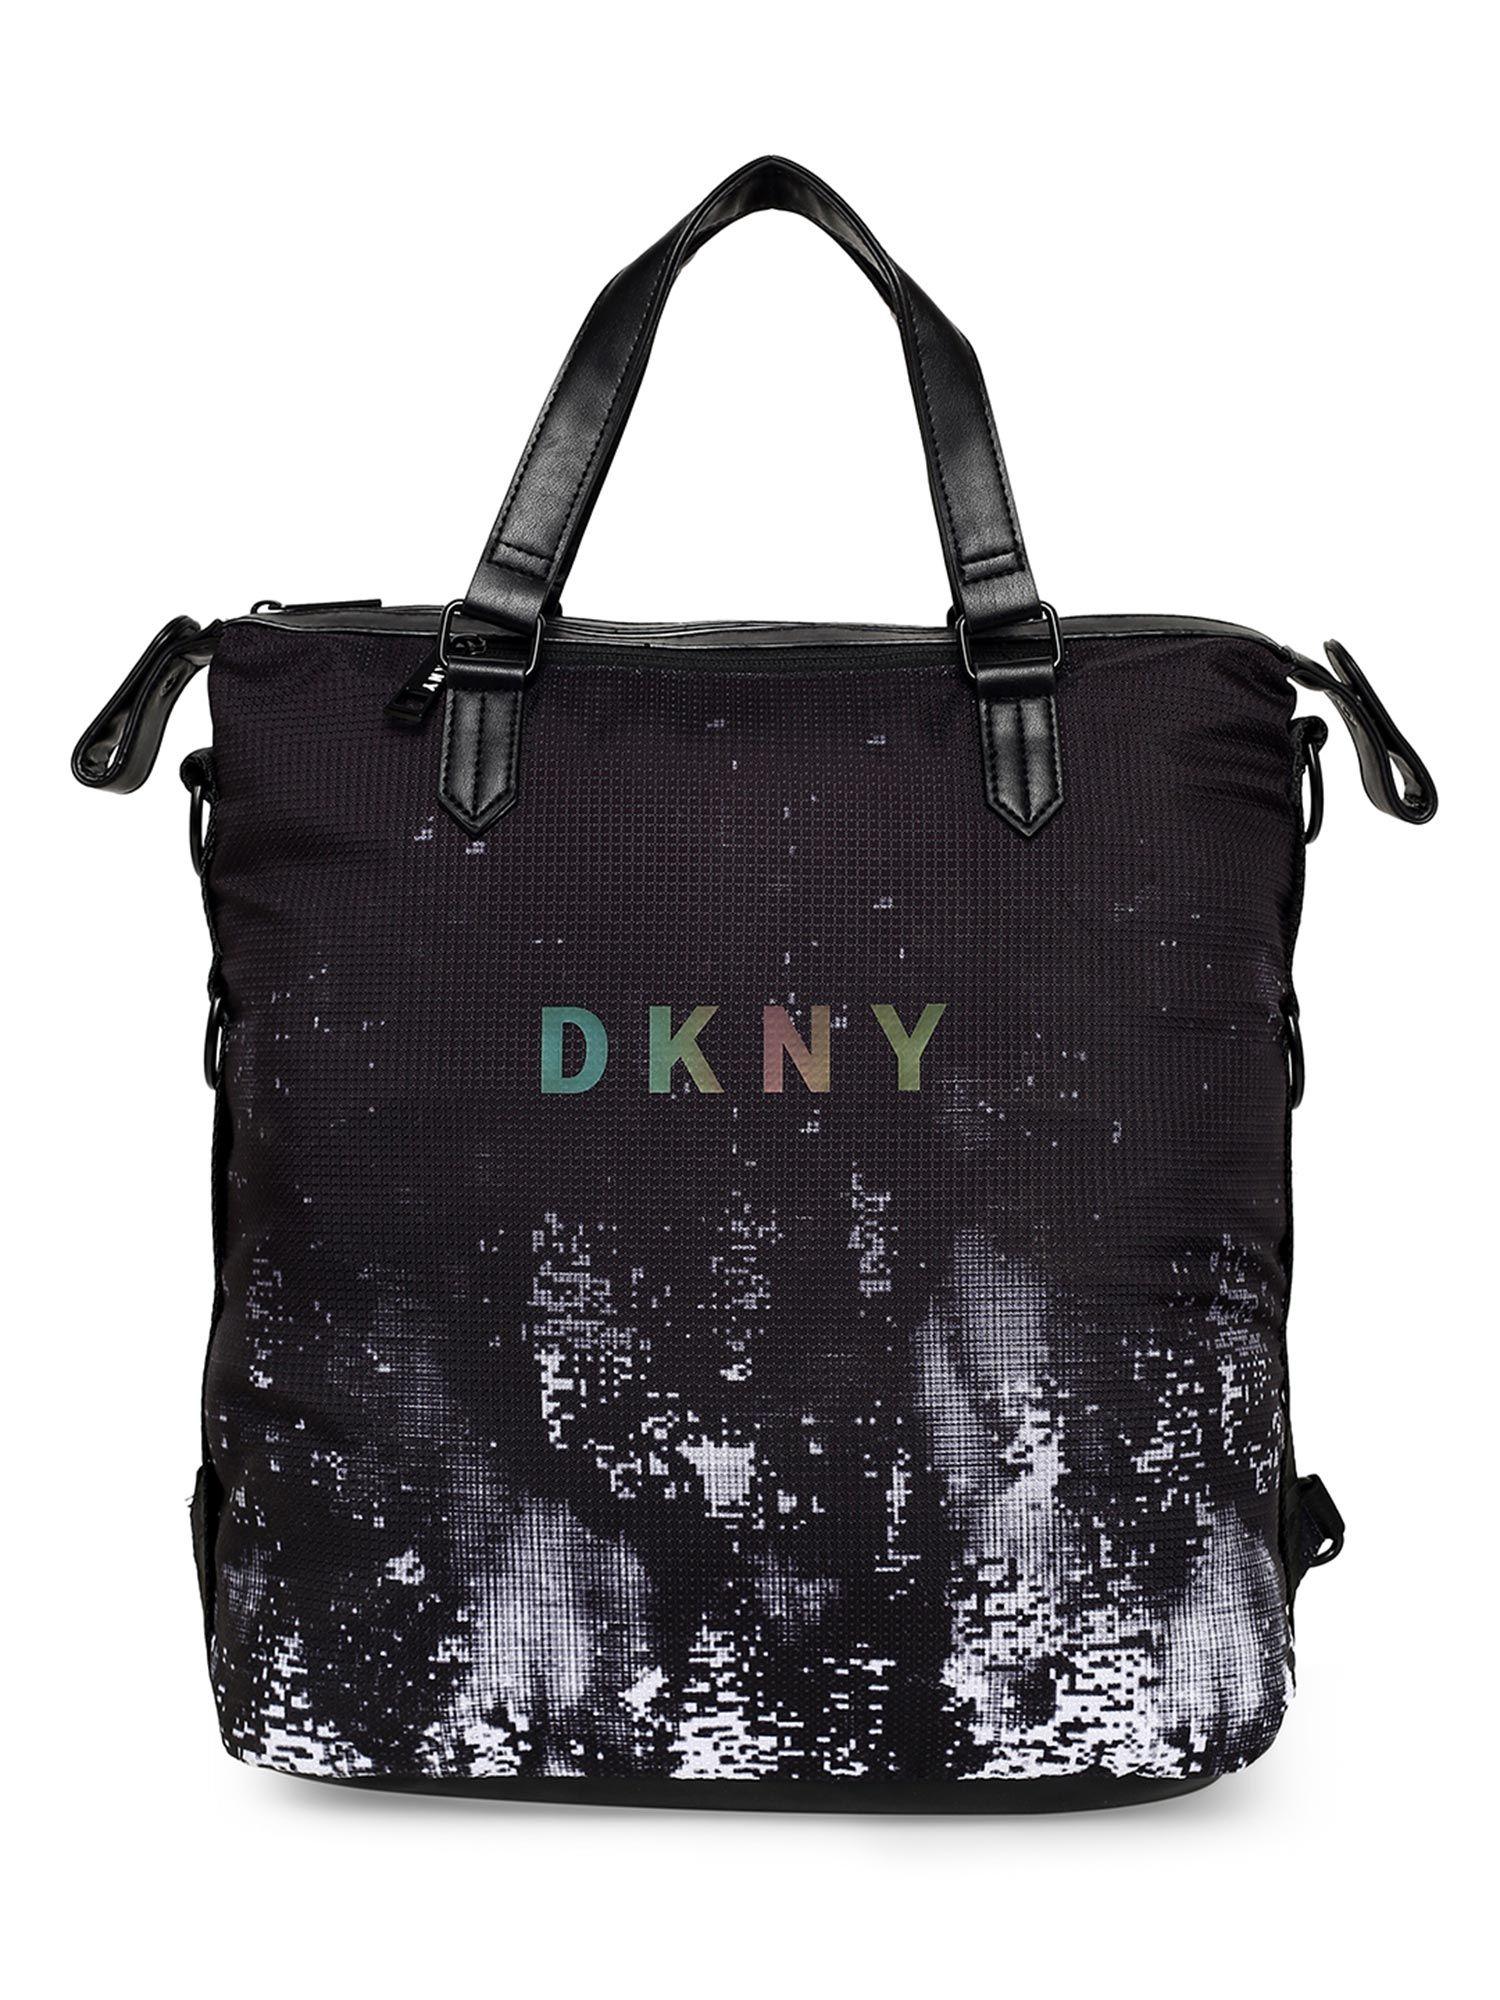 glimmer-black-color-polyester-material-soft-medium-size-boarding-bag